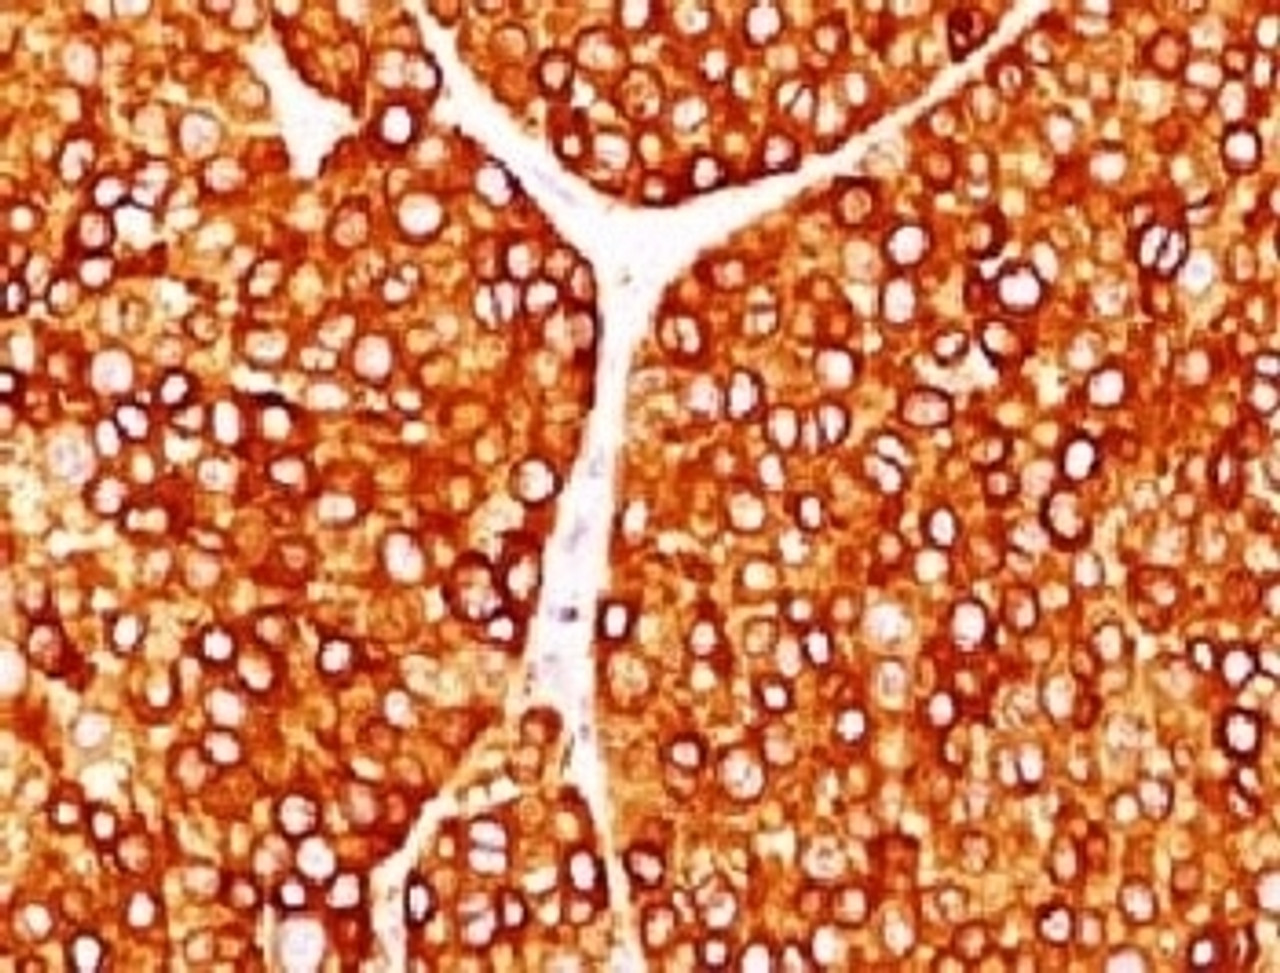 IHC testing of FFPE human melanoma with Tyrosinase antibody (clone TRSN1-1) .